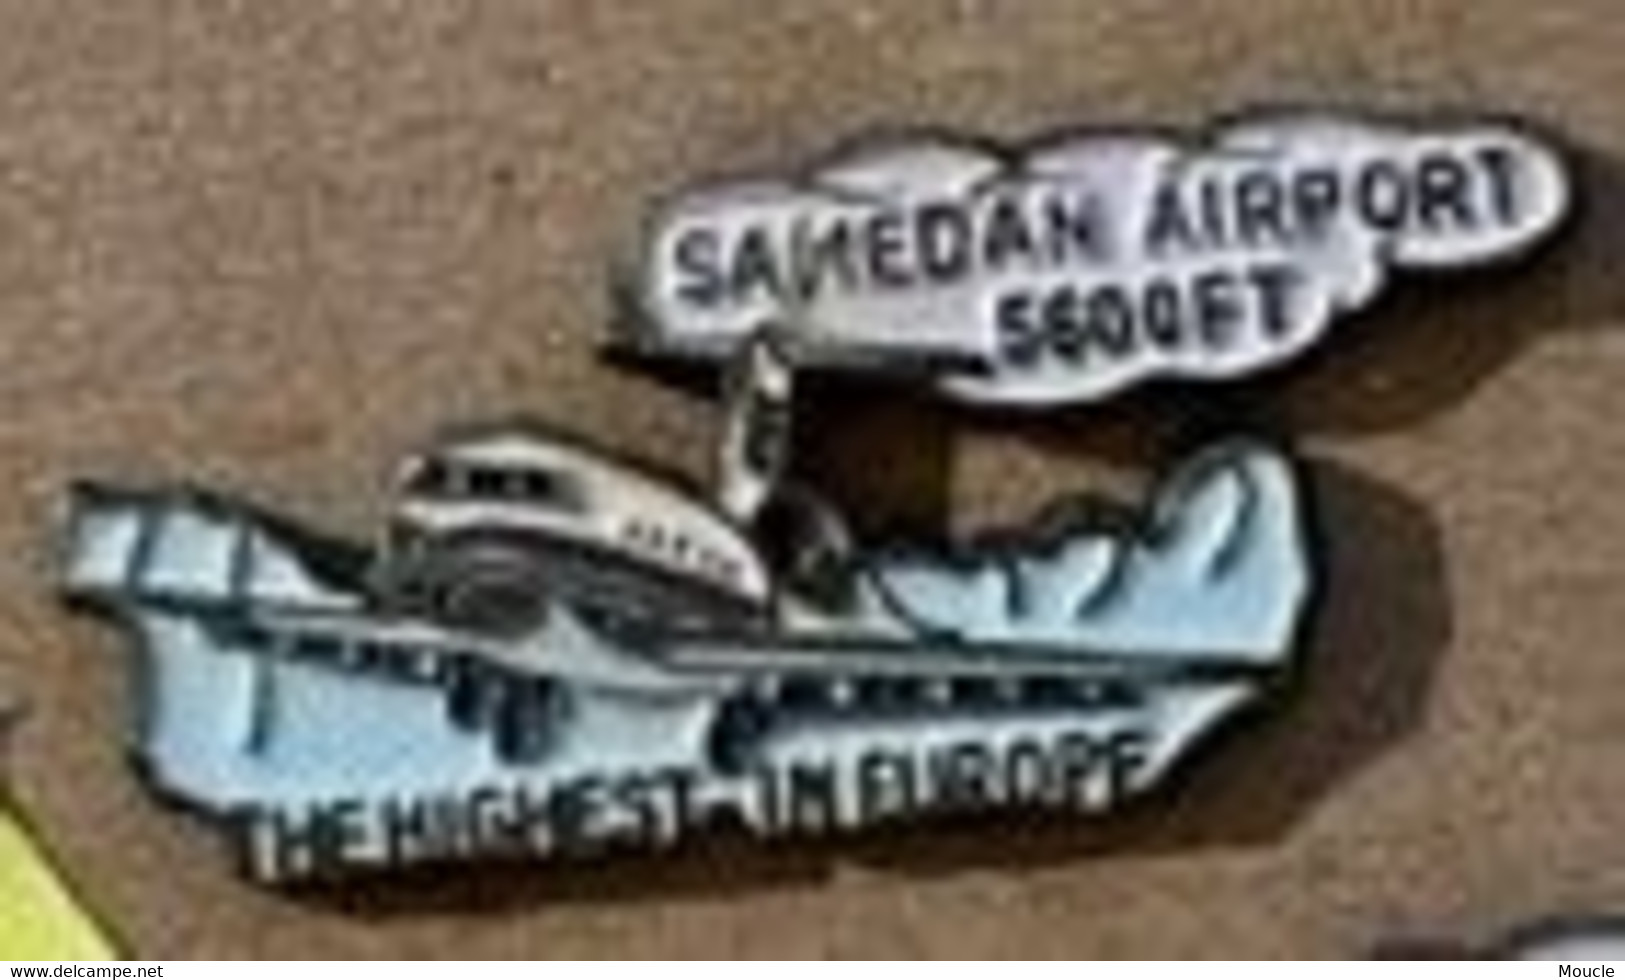 SAMEDAN AIRPORT 5600ft - THE HIGHEST IN EUROPE - PLANE - AVION - FOND BLANC - FLUGZEUG - AEREO-     (24) - Aerei